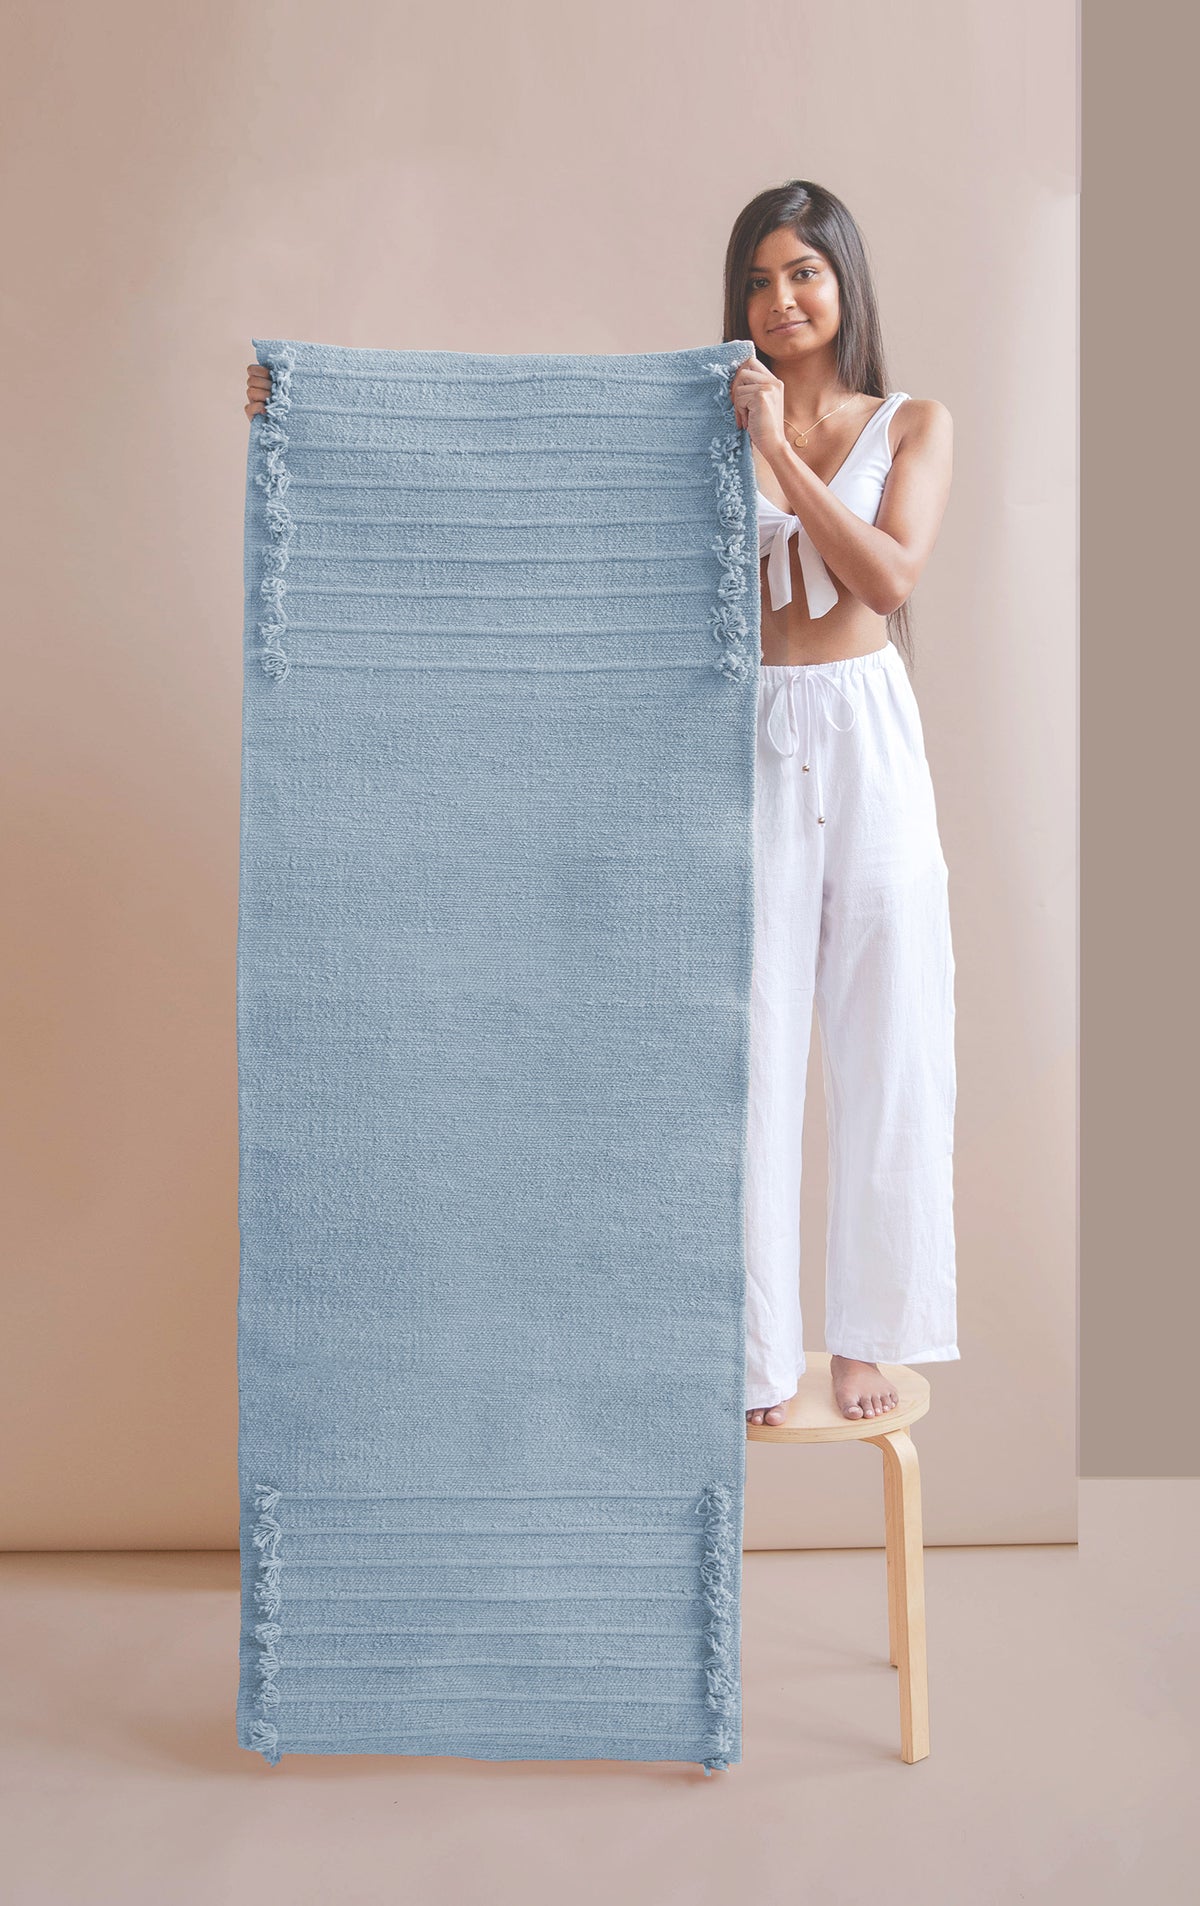 Yoga Mat - Herbal Organic Cotton Yoga Mat & Bag 72 x 27 inch